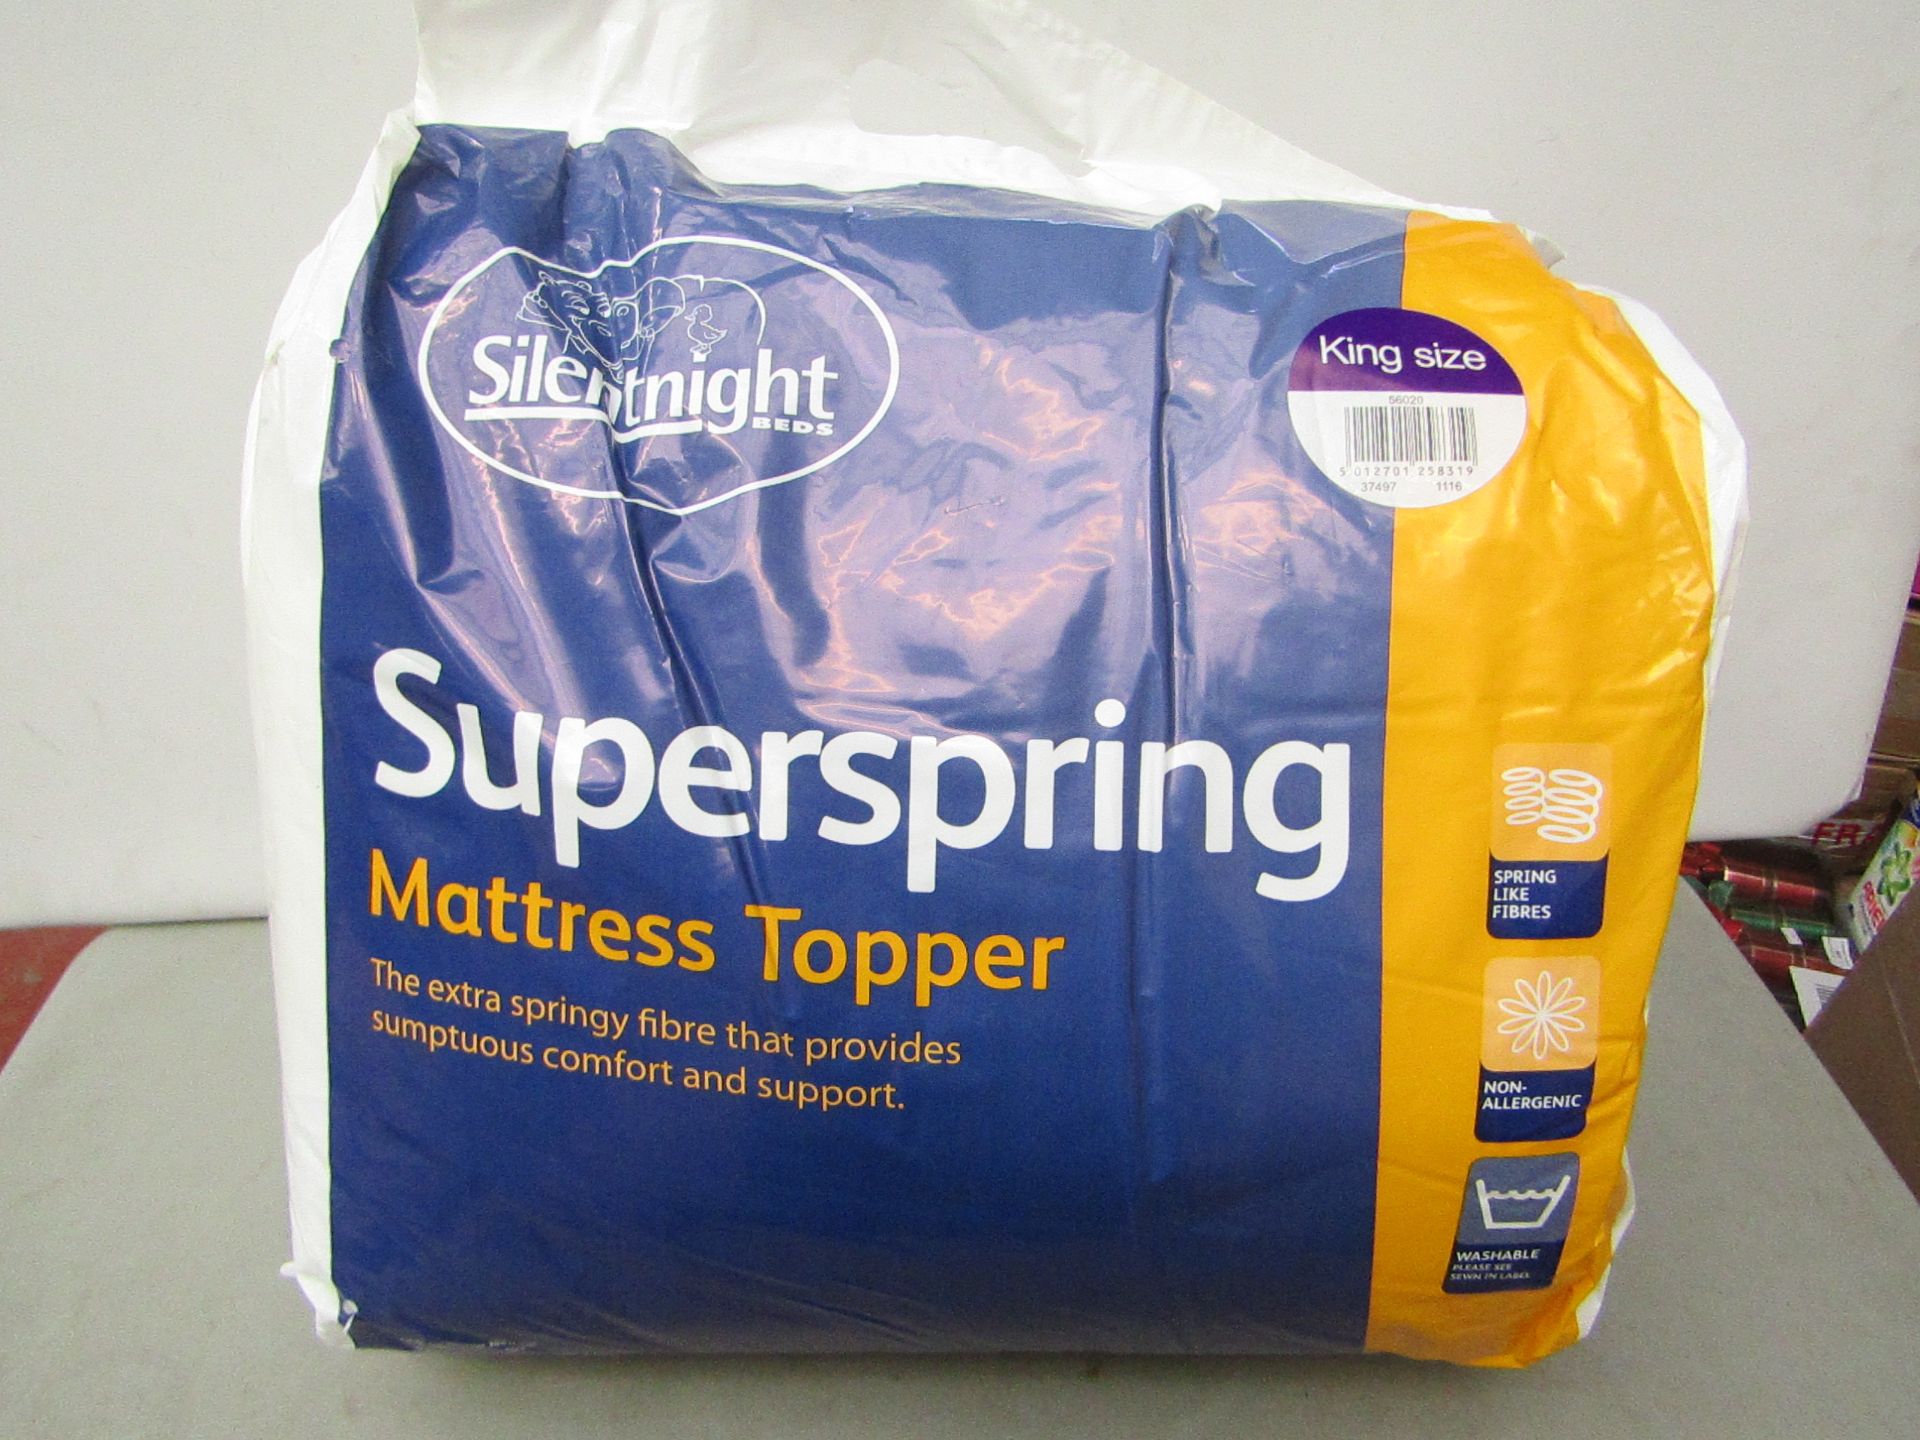 Silentnight Superspring Mattress Topper King size new & packaged